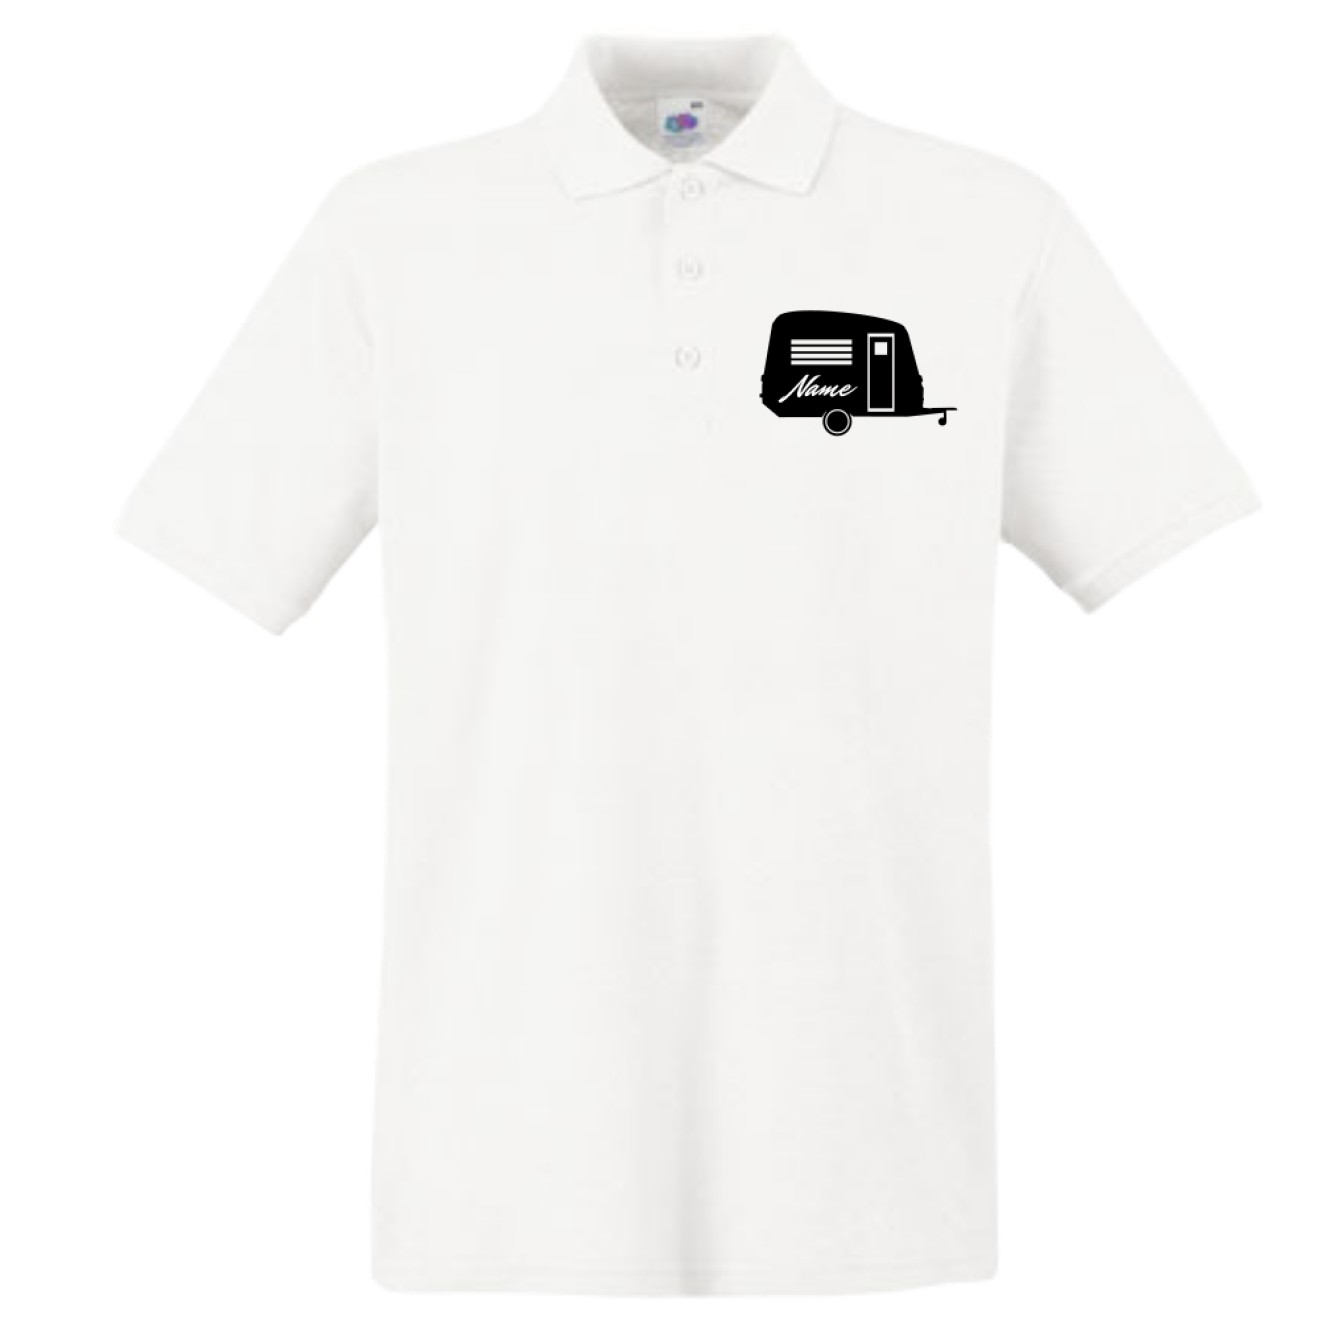 T-Shirt & Poloshirt - Wohnwagen + Name - Freie Auswahl